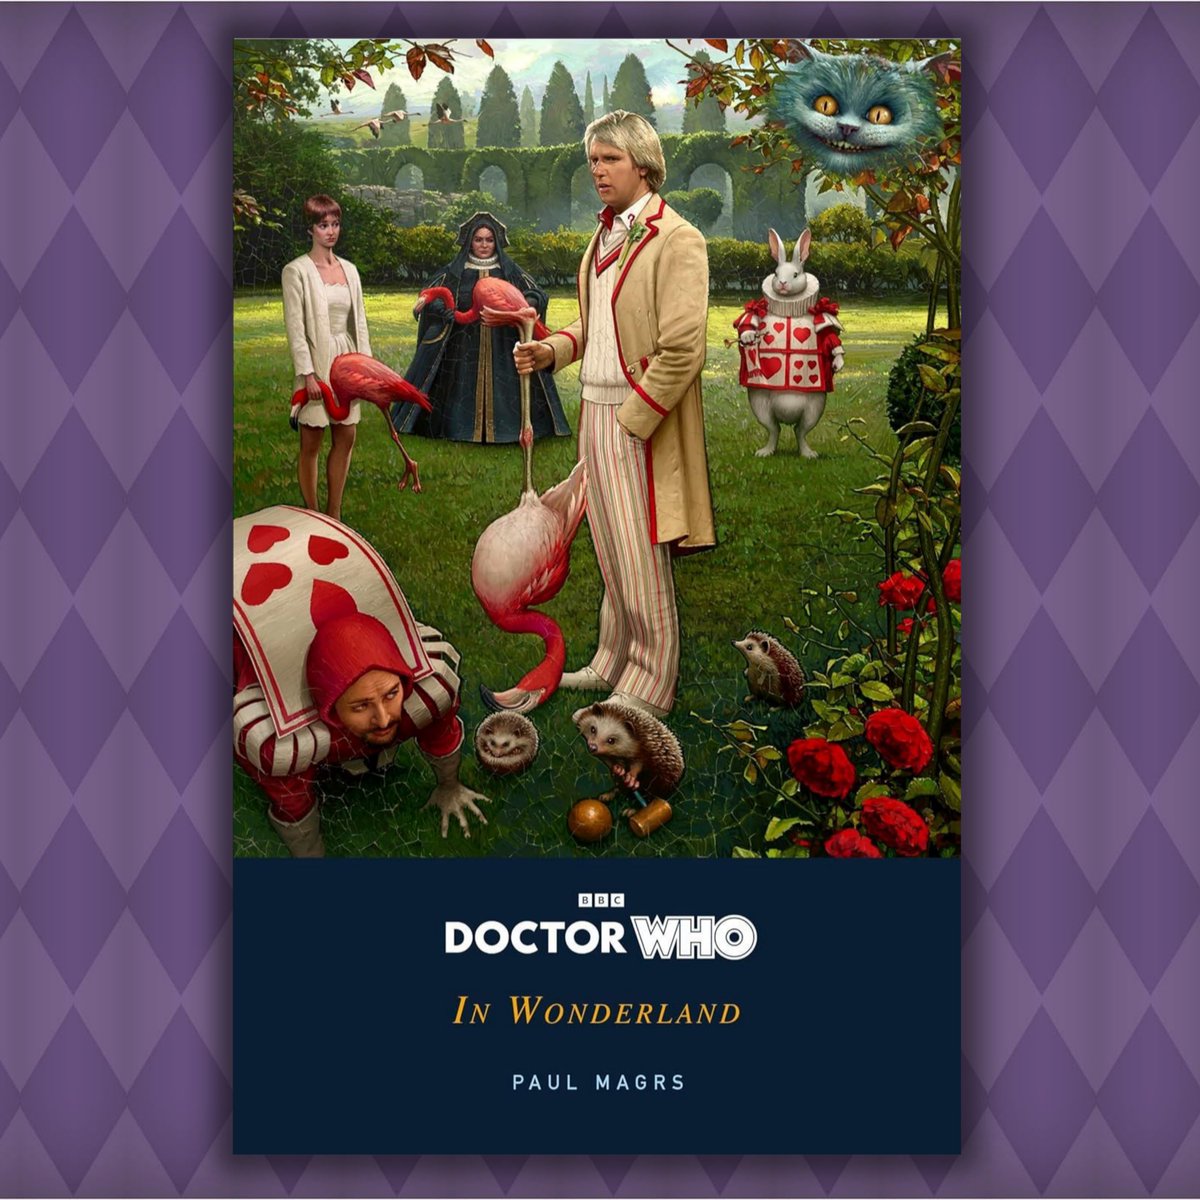 Cover art revealed for #DoctorWho In Wonderland by @paulmagrs